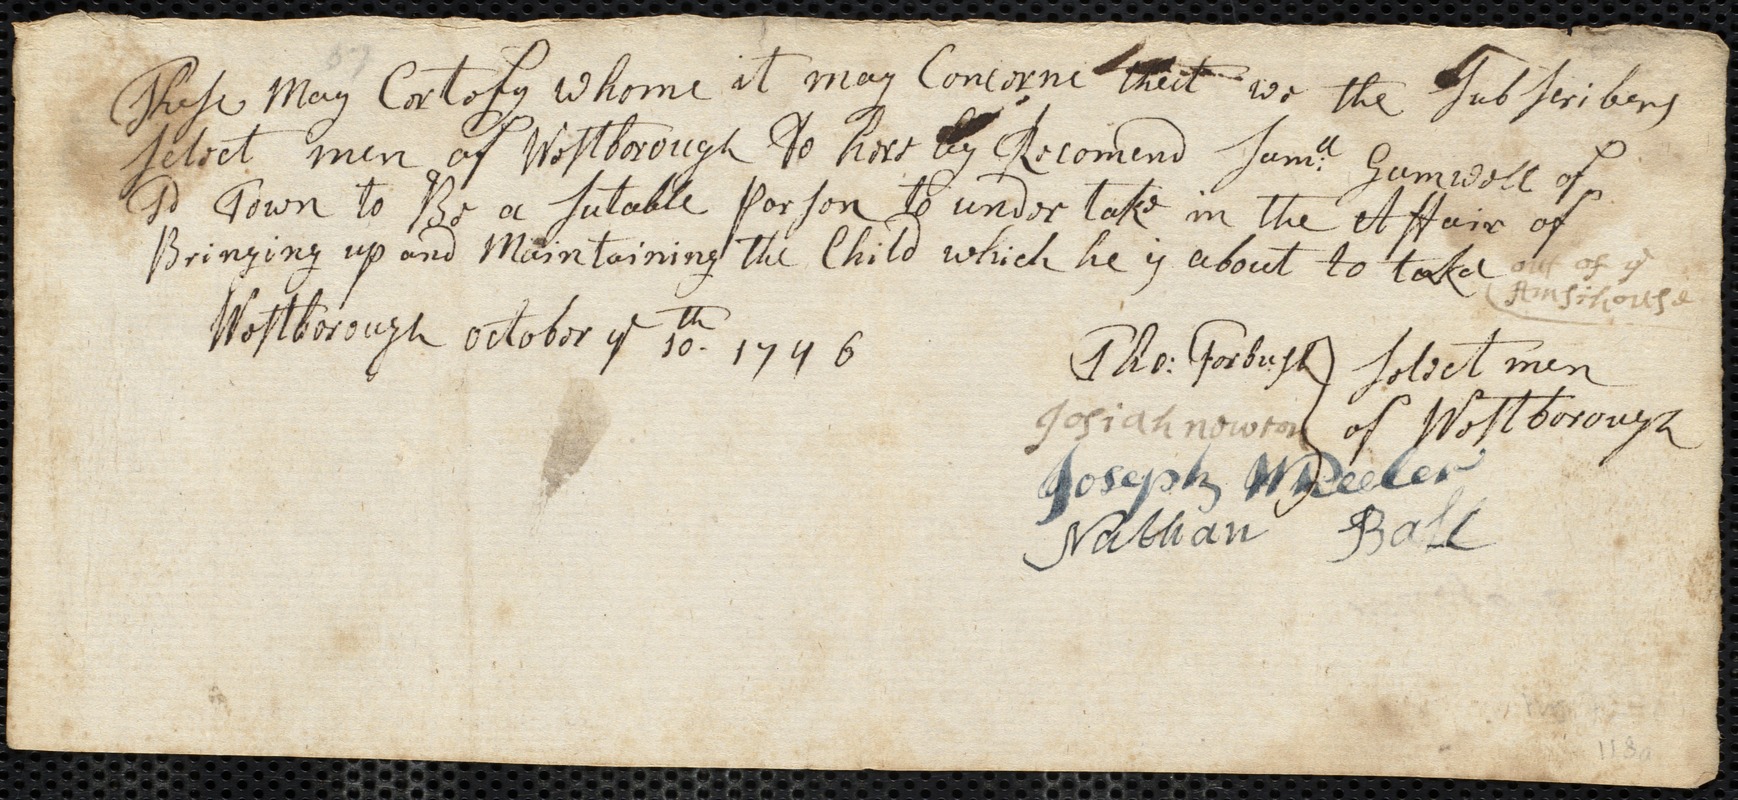 Thomas Smith indentured to apprentice with Samuel [Sam] Gamwell of Westborough, 21 October 1746